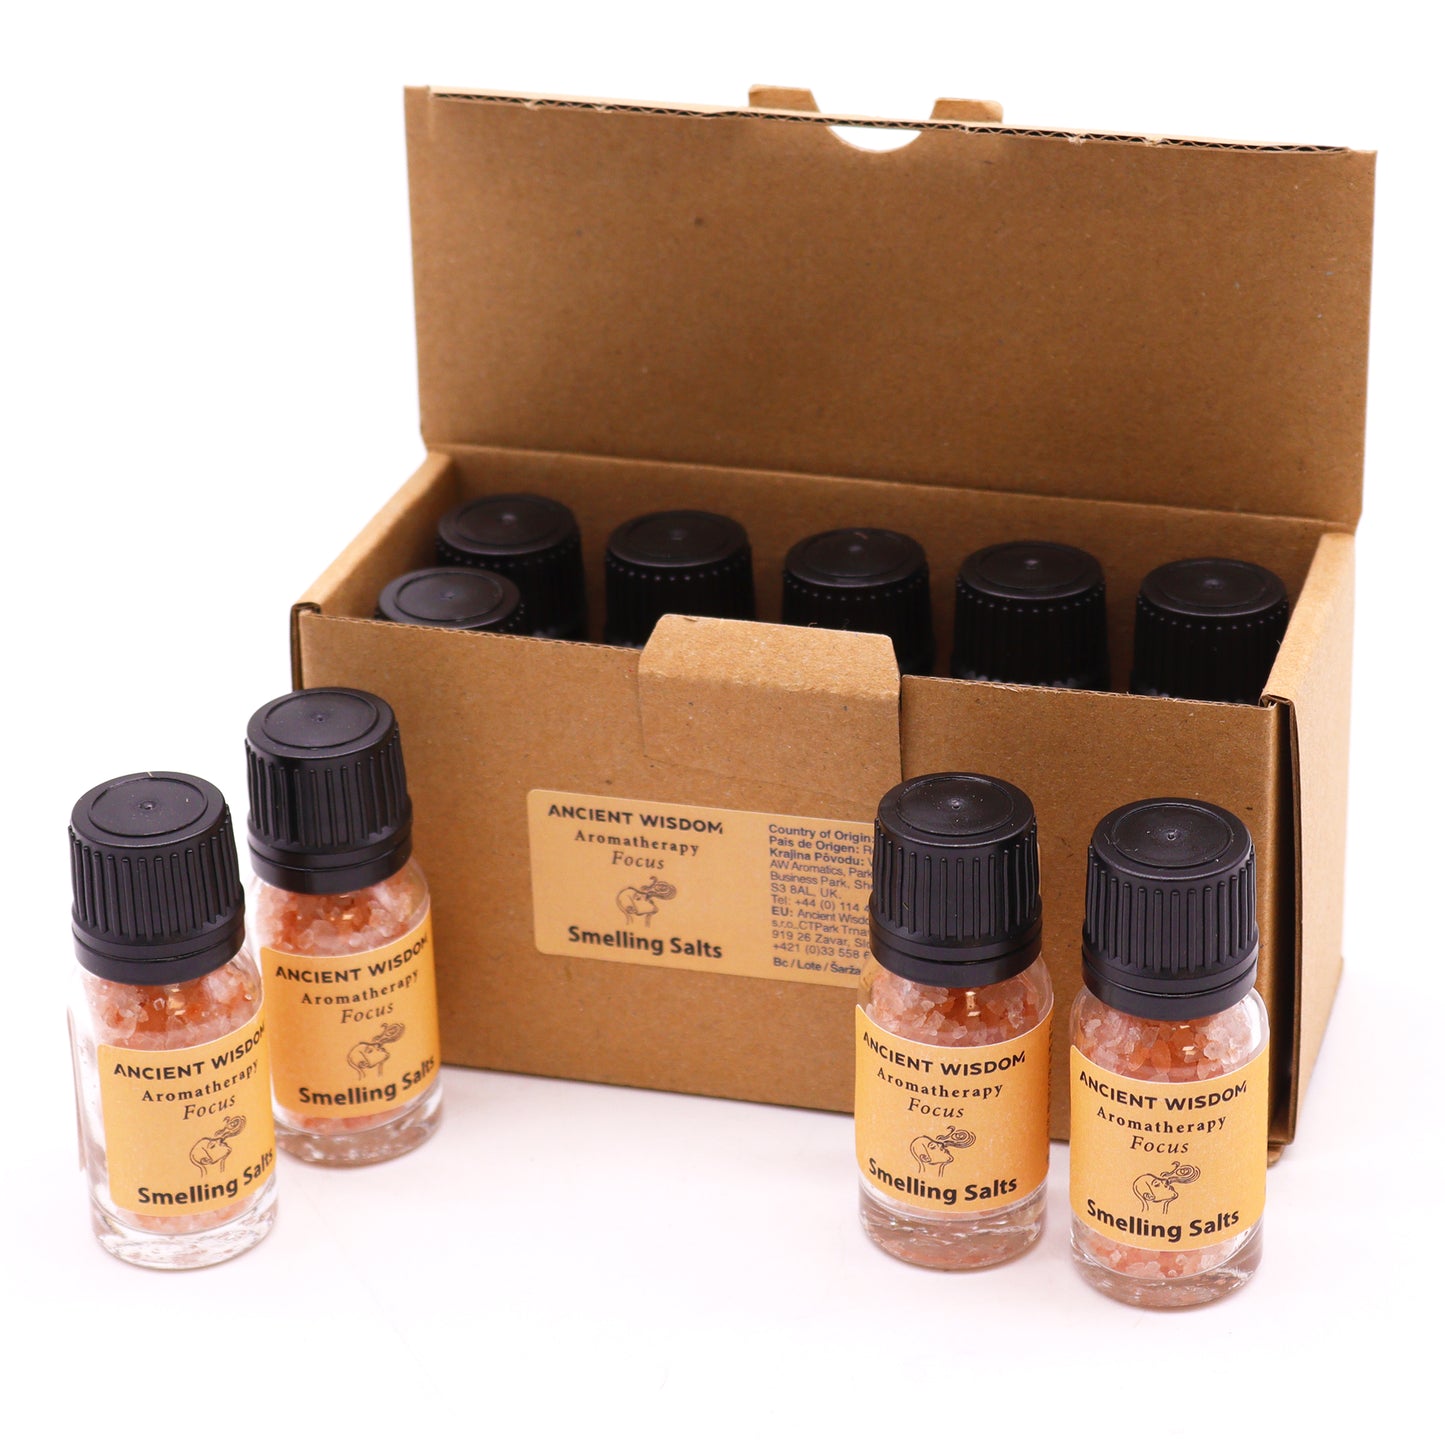 Focus Aromatherapy Smelling Salt